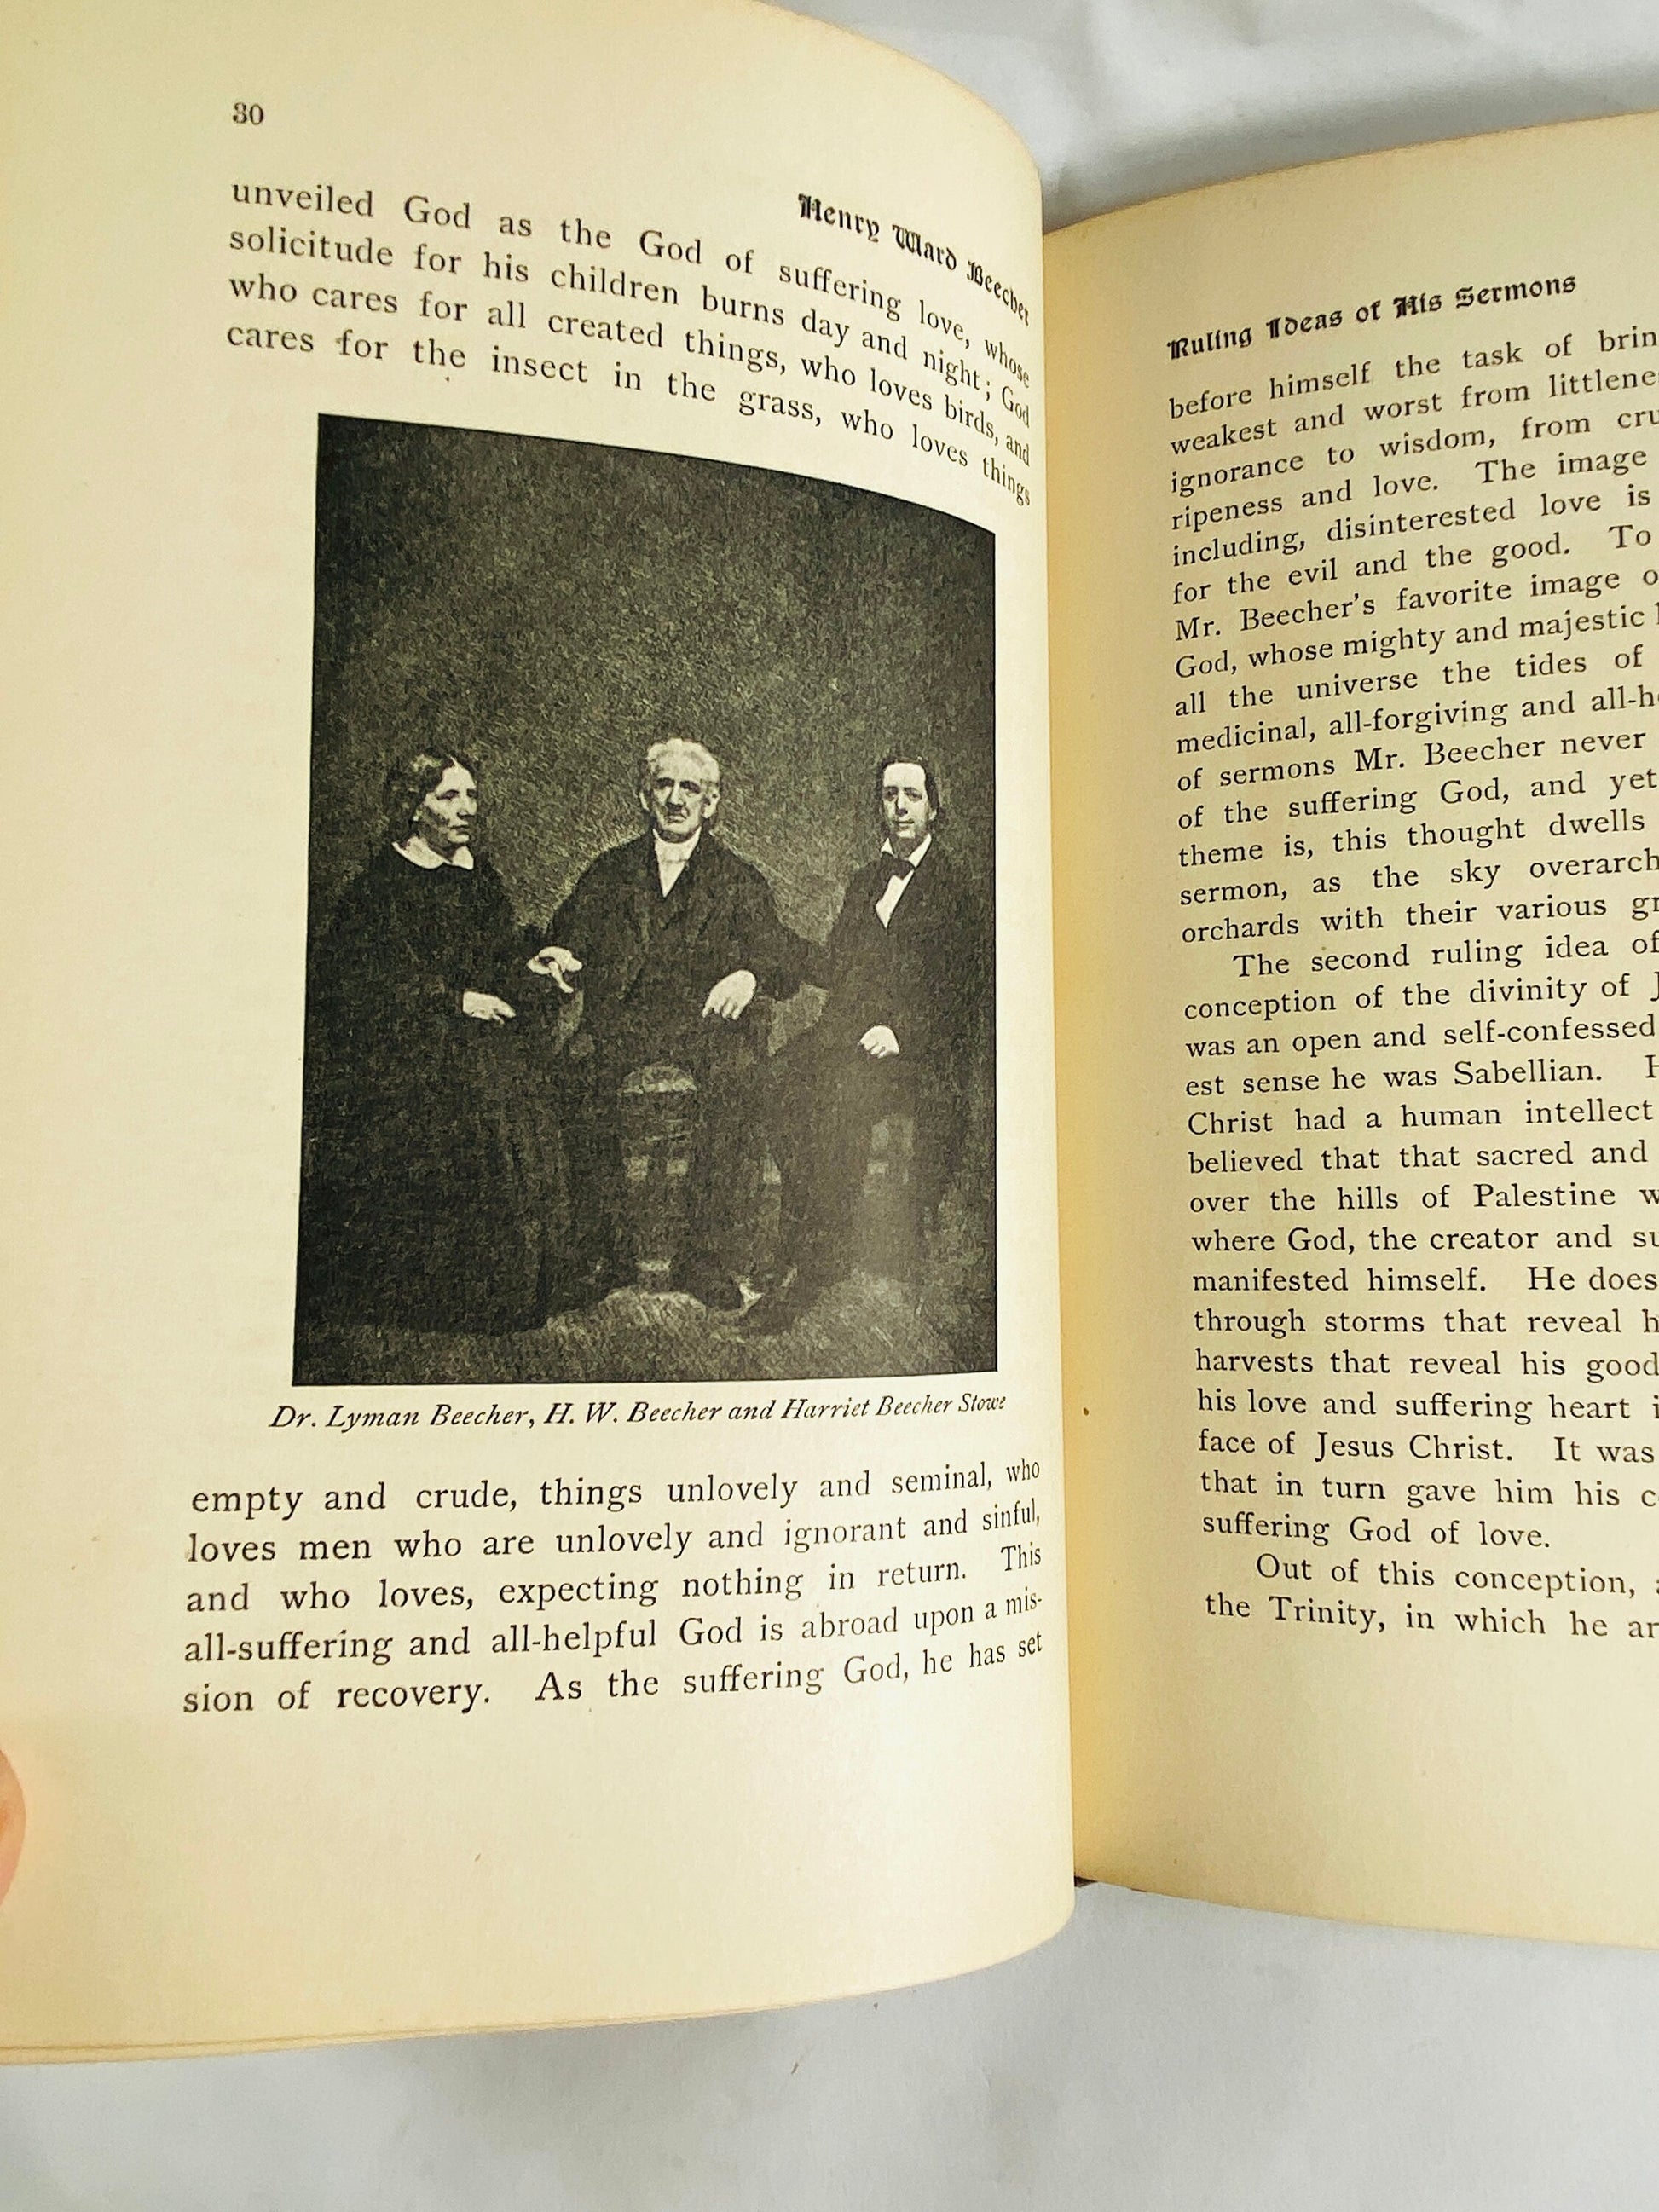 Henry Ward Beecher biography brother of Harriet Beecher Stowe, author of Uncle Tom's Cabin Vintage book by Tewksbury circa 1904 Civil War